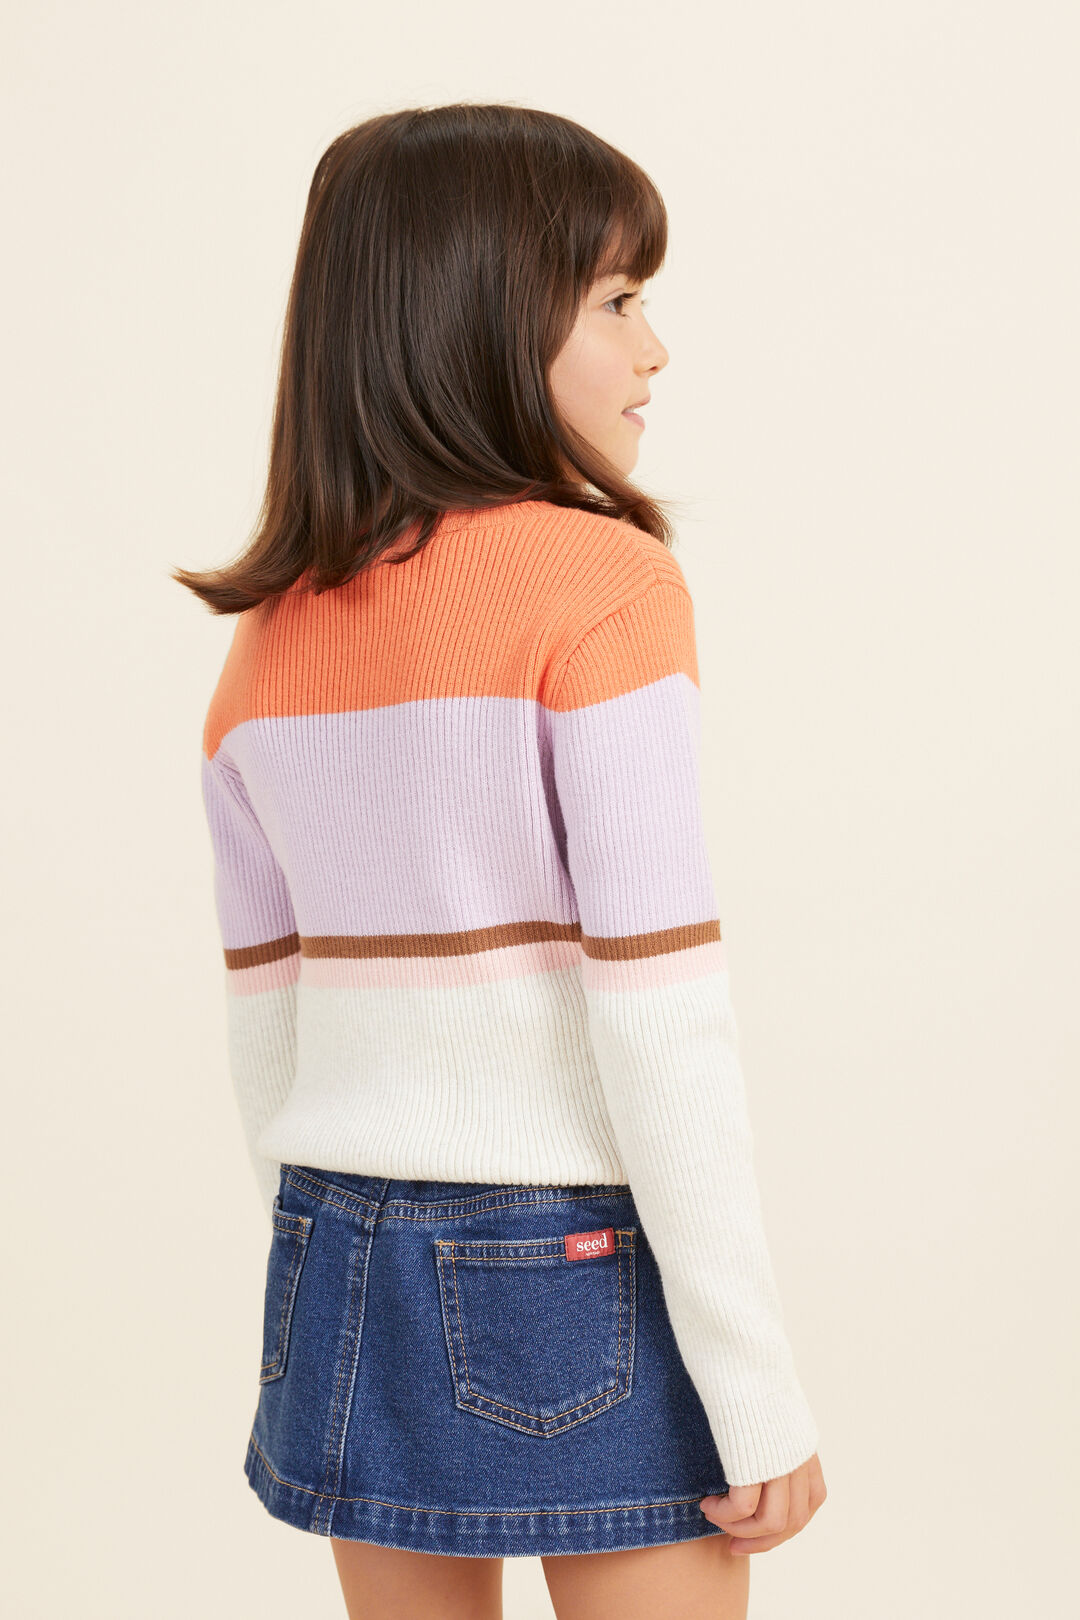 Colourblock Sweater  Multi  hi-res